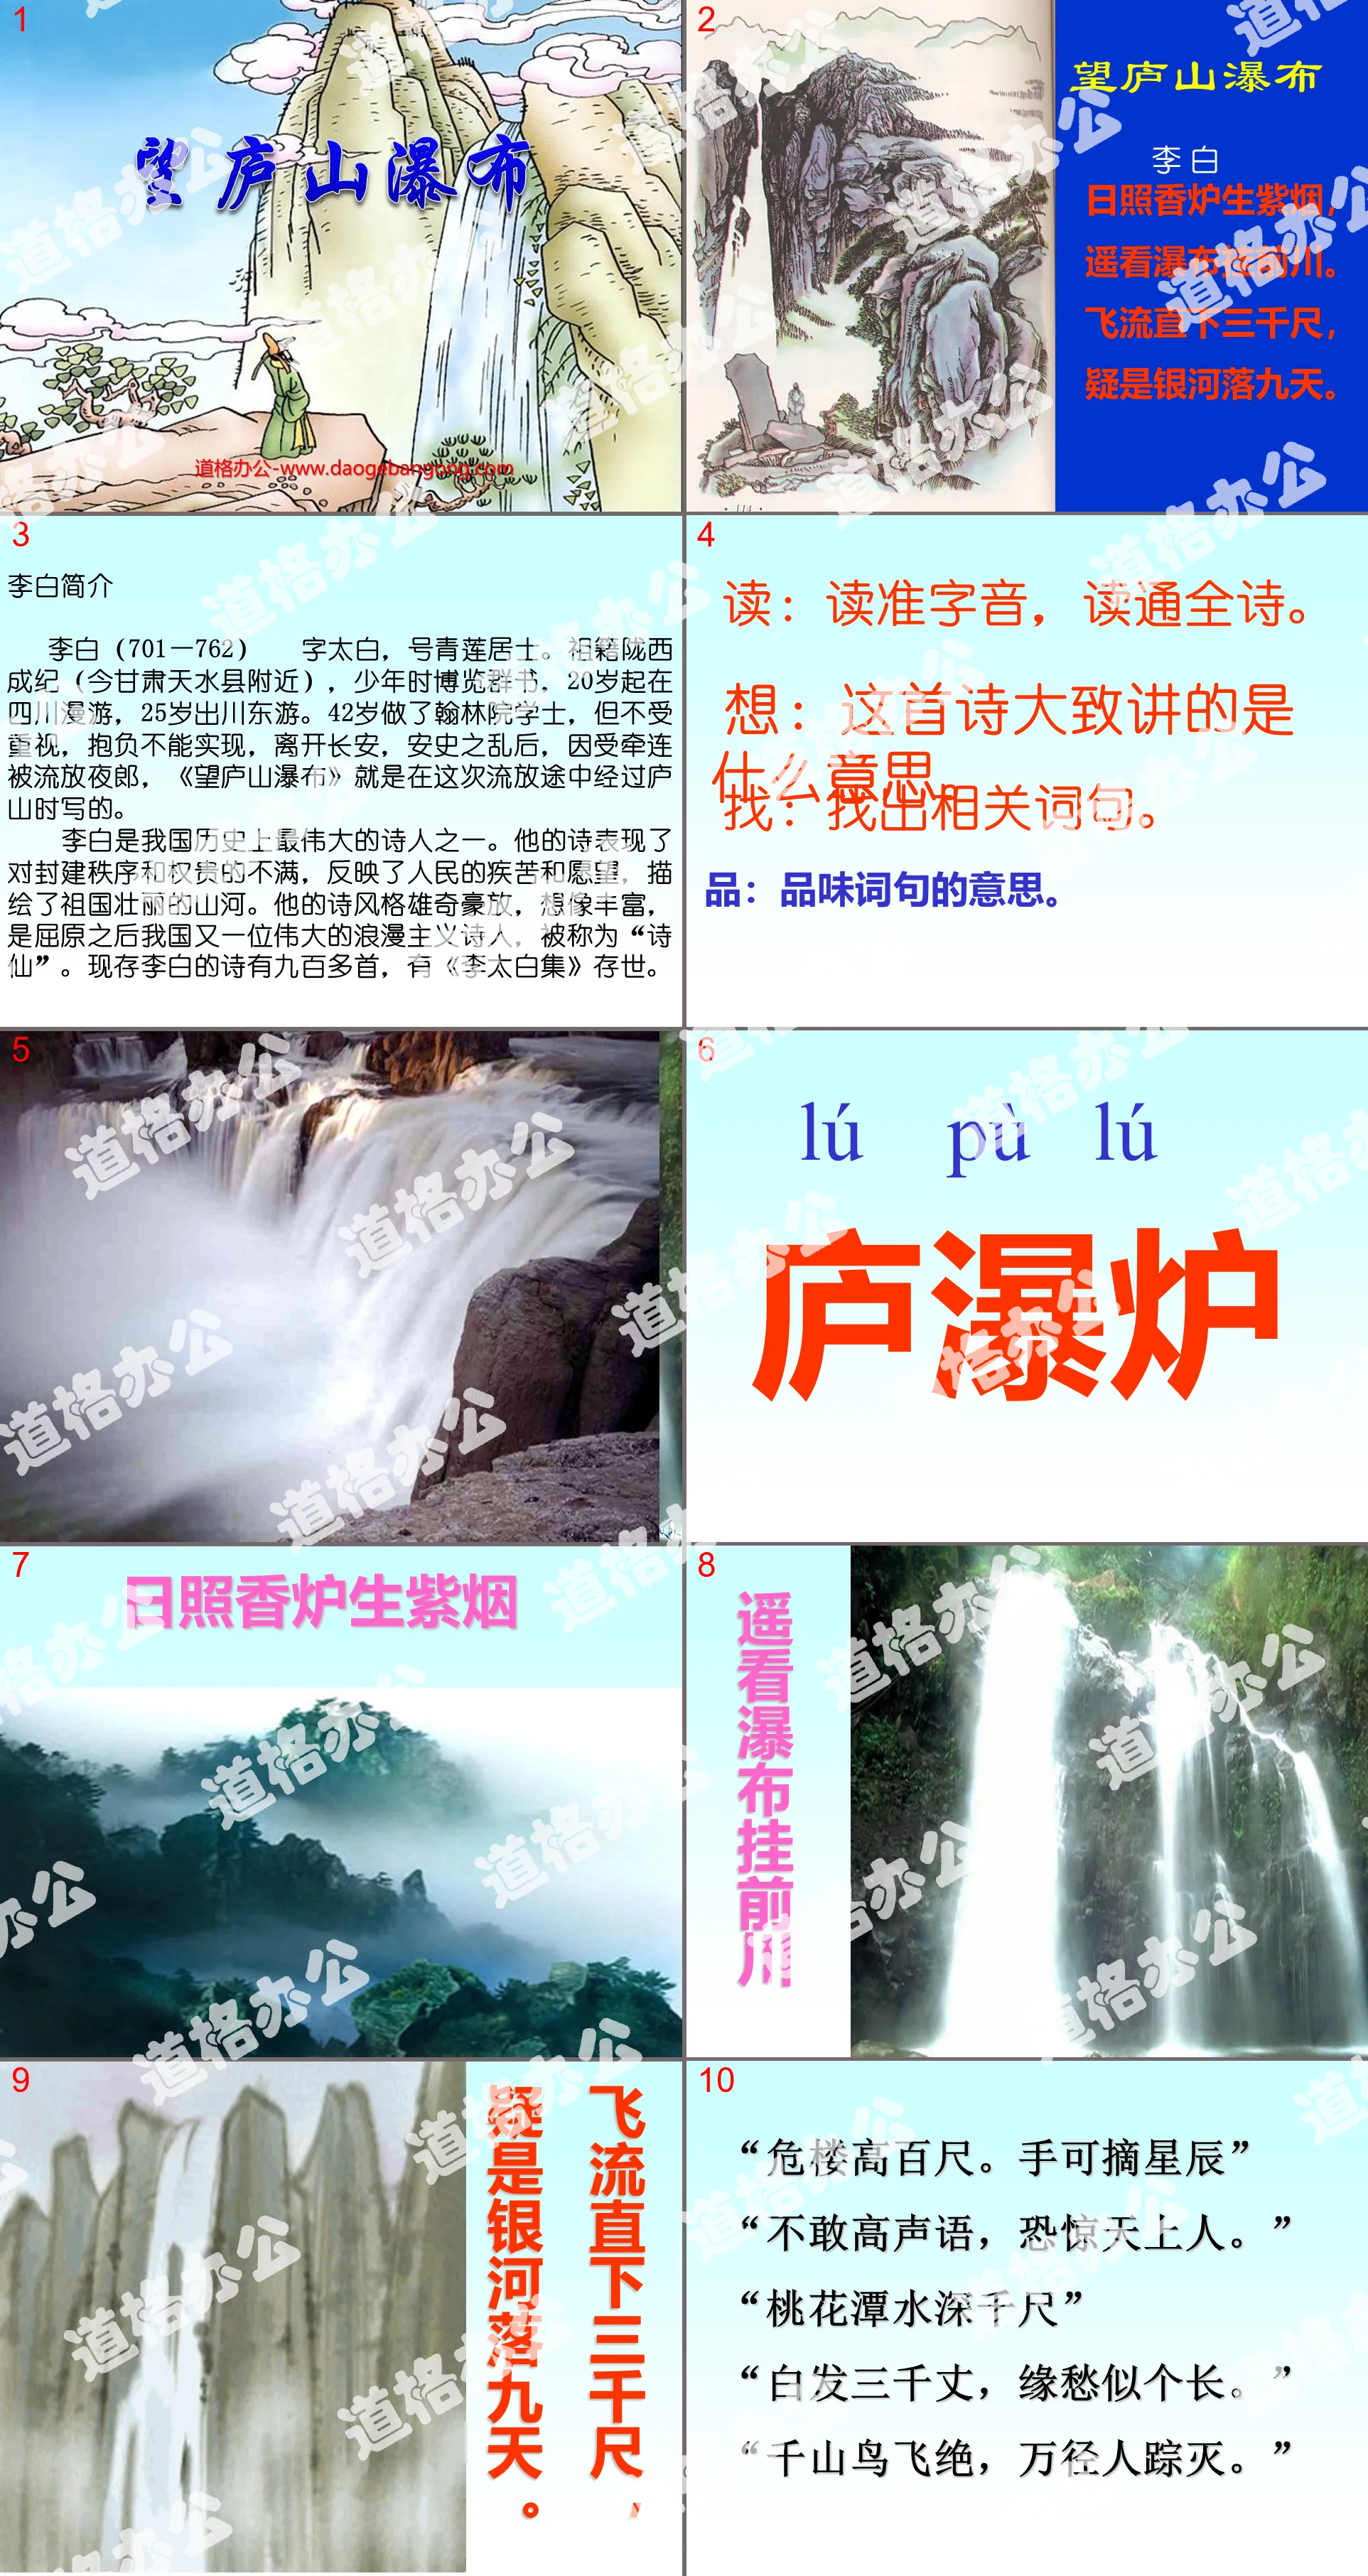 "Wanglushan Waterfall" PPT courseware 4